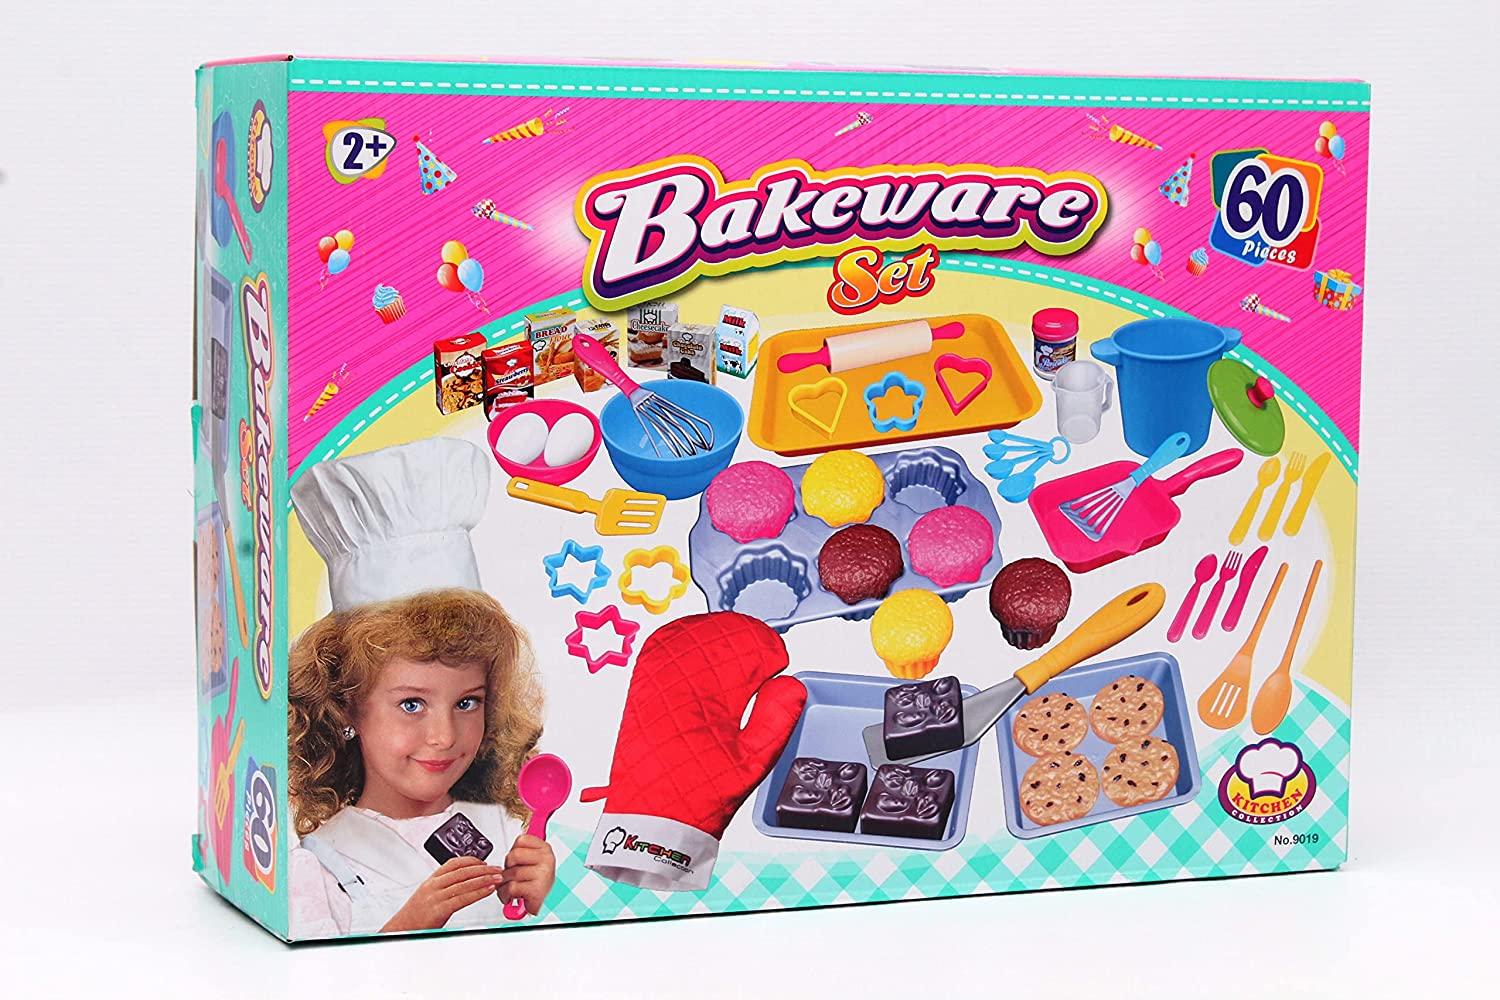 bakeware set - Ourkids - OKO